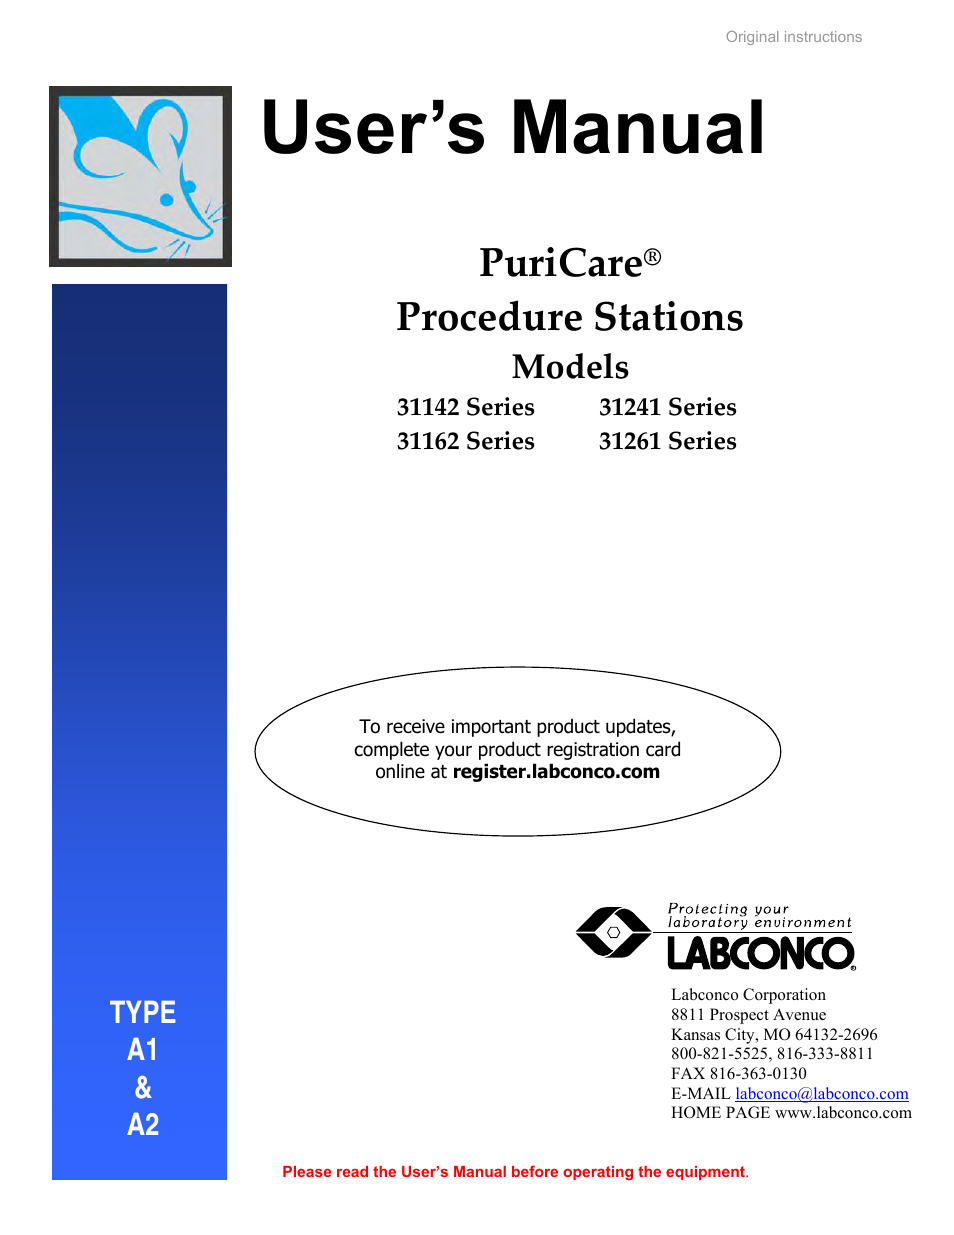 PuriCare Procedure Stations 31241 Series